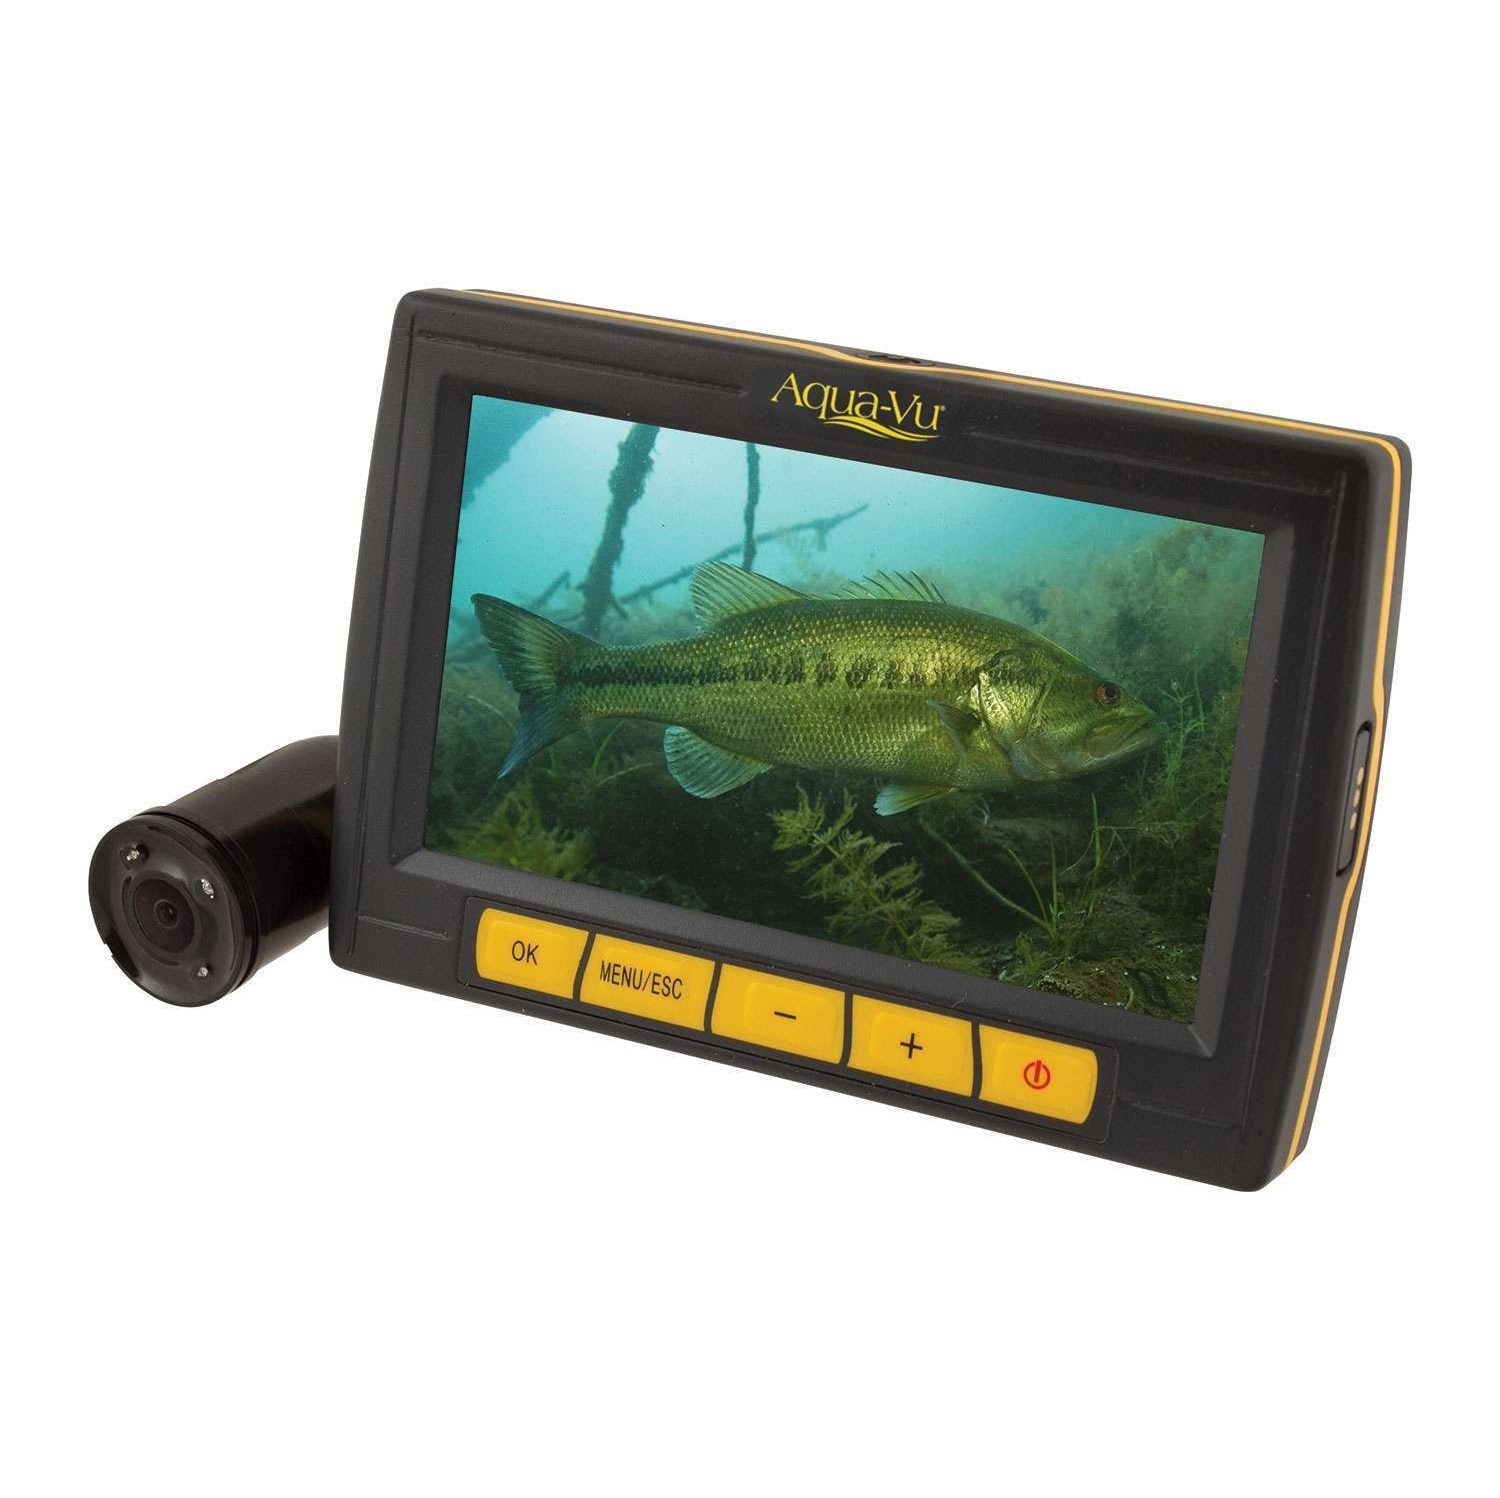 Камера аква. Подводная камера Aqua-vu Micro Revolution Pro 5.0. Камера Aqua vu Micro. Aqua-vu Micro Plus/Plus DVR/Micro 5. Камера запасная для Aqua-vu Micro Plus/Plus DVR/Micro 5.